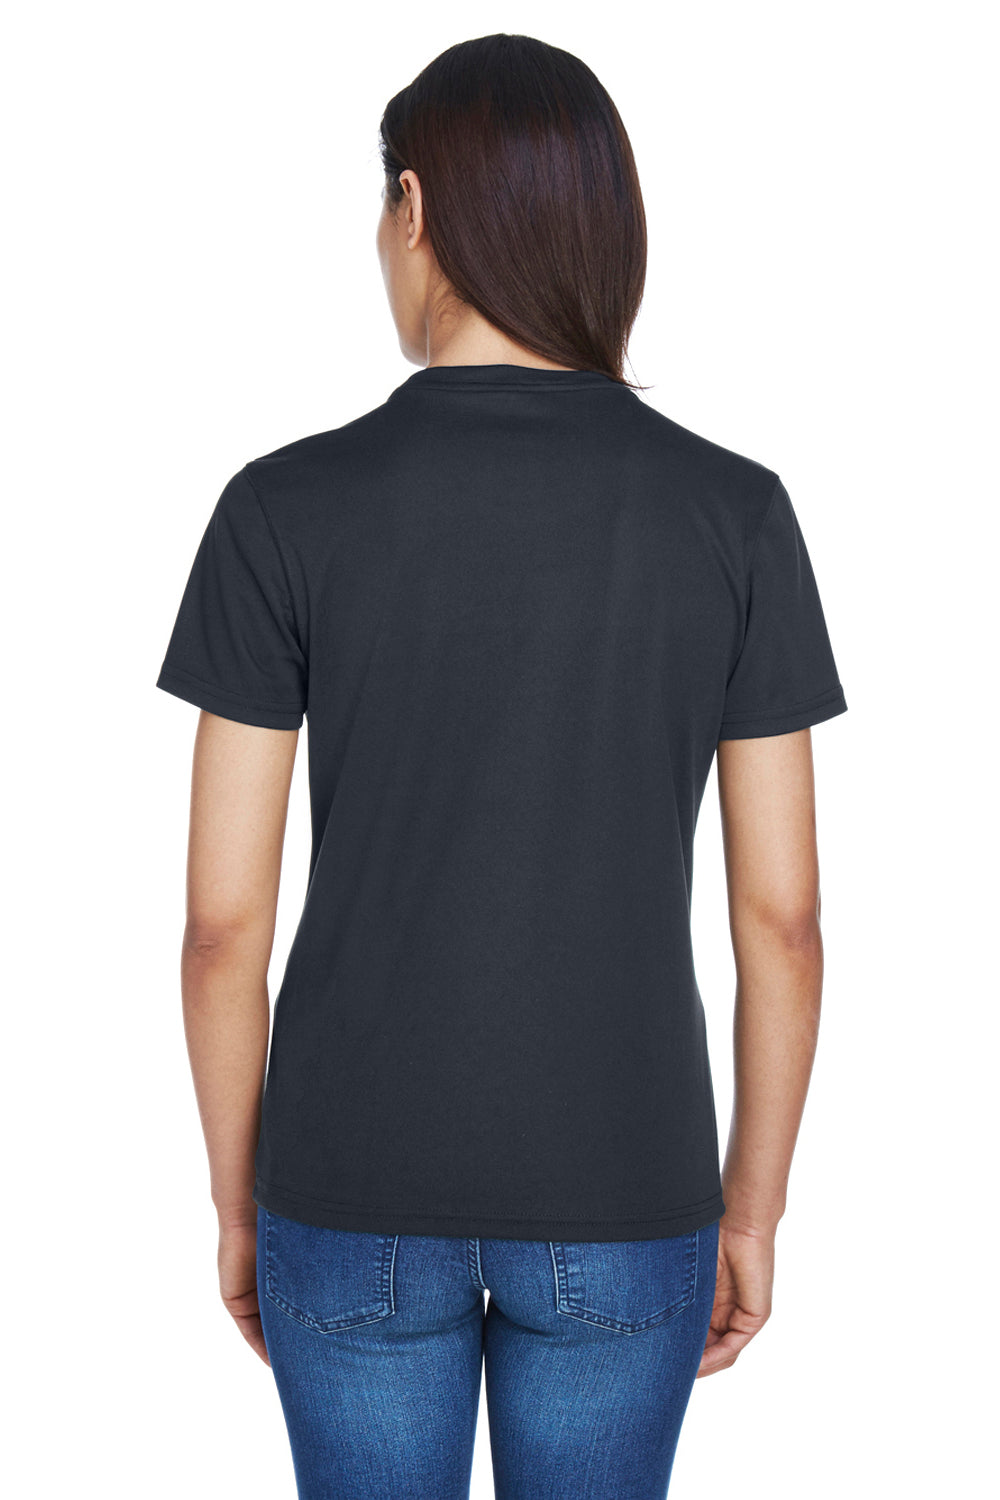 Core 365 78182 Womens Pace Performance Moisture Wicking Short Sleeve Crewneck T-Shirt Carbon Grey Back